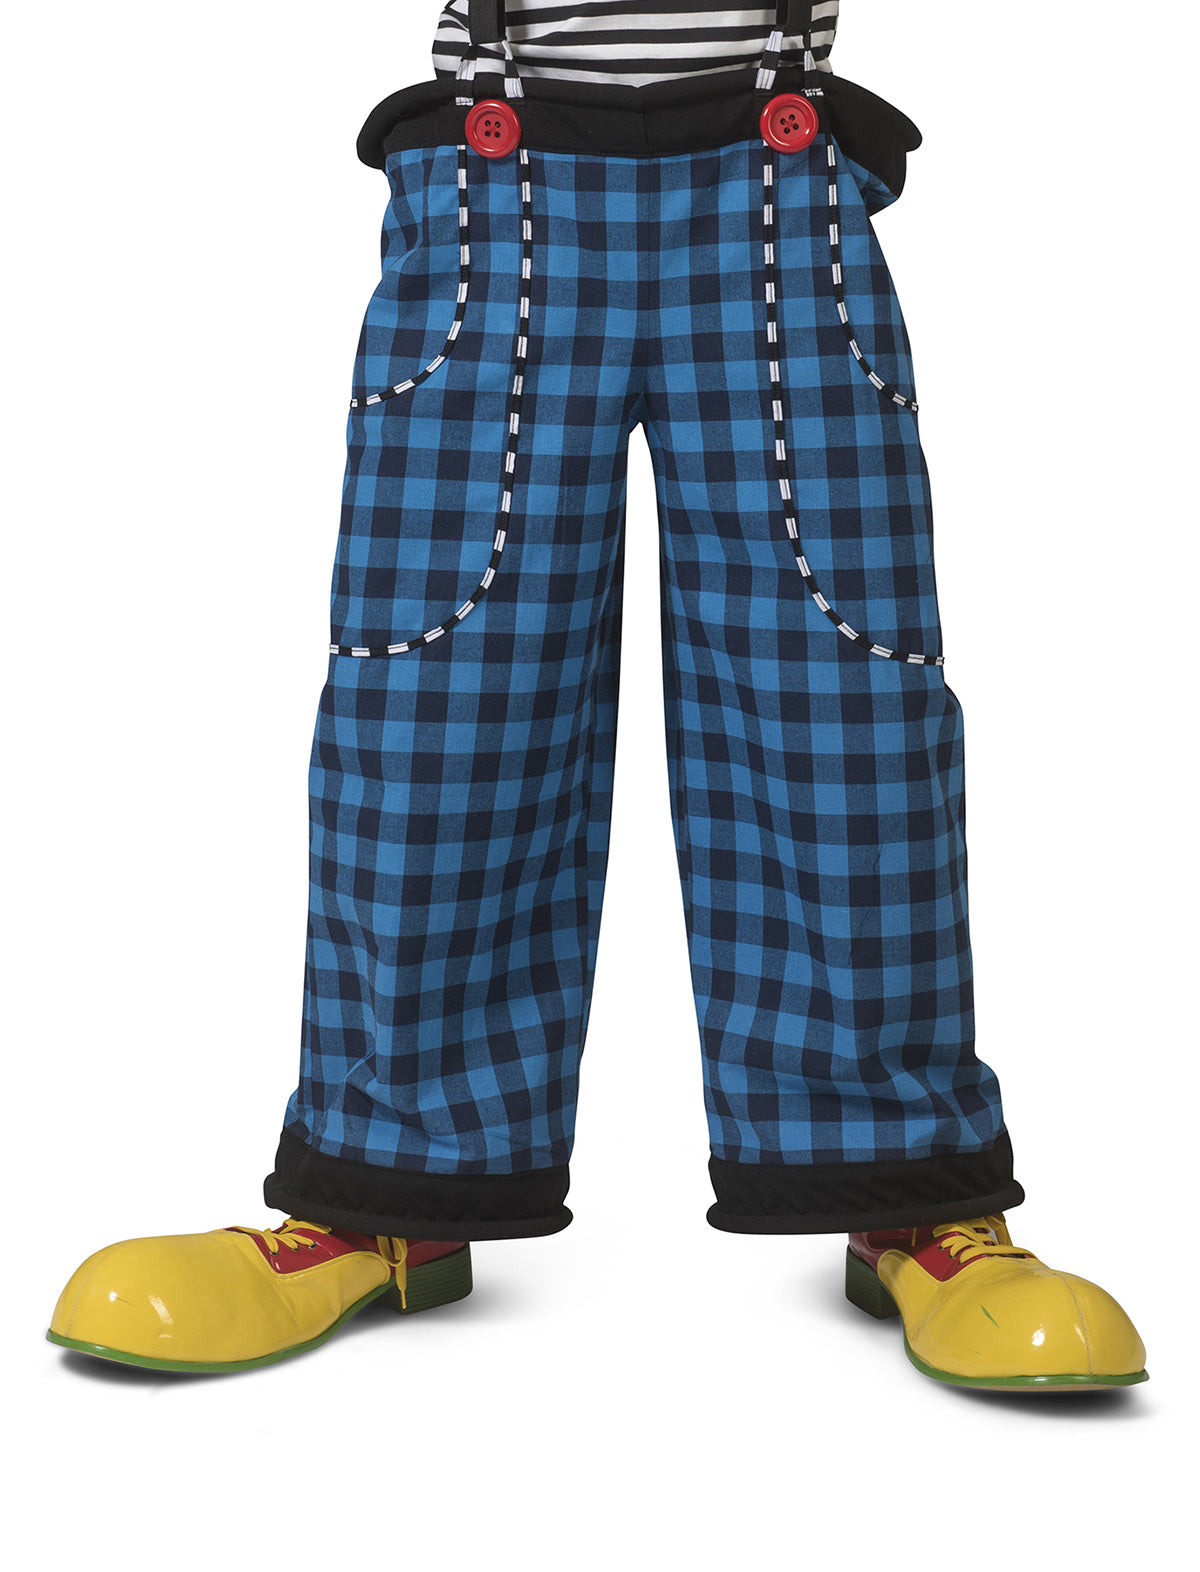 Funny Fashion - Clown & Nar Kostuum - Grote Gestikte Zakken Broek Clown August Blauw Zwarte Ruitjes Man - blauw,zwart - One Size - Halloween - Verkleedkleding